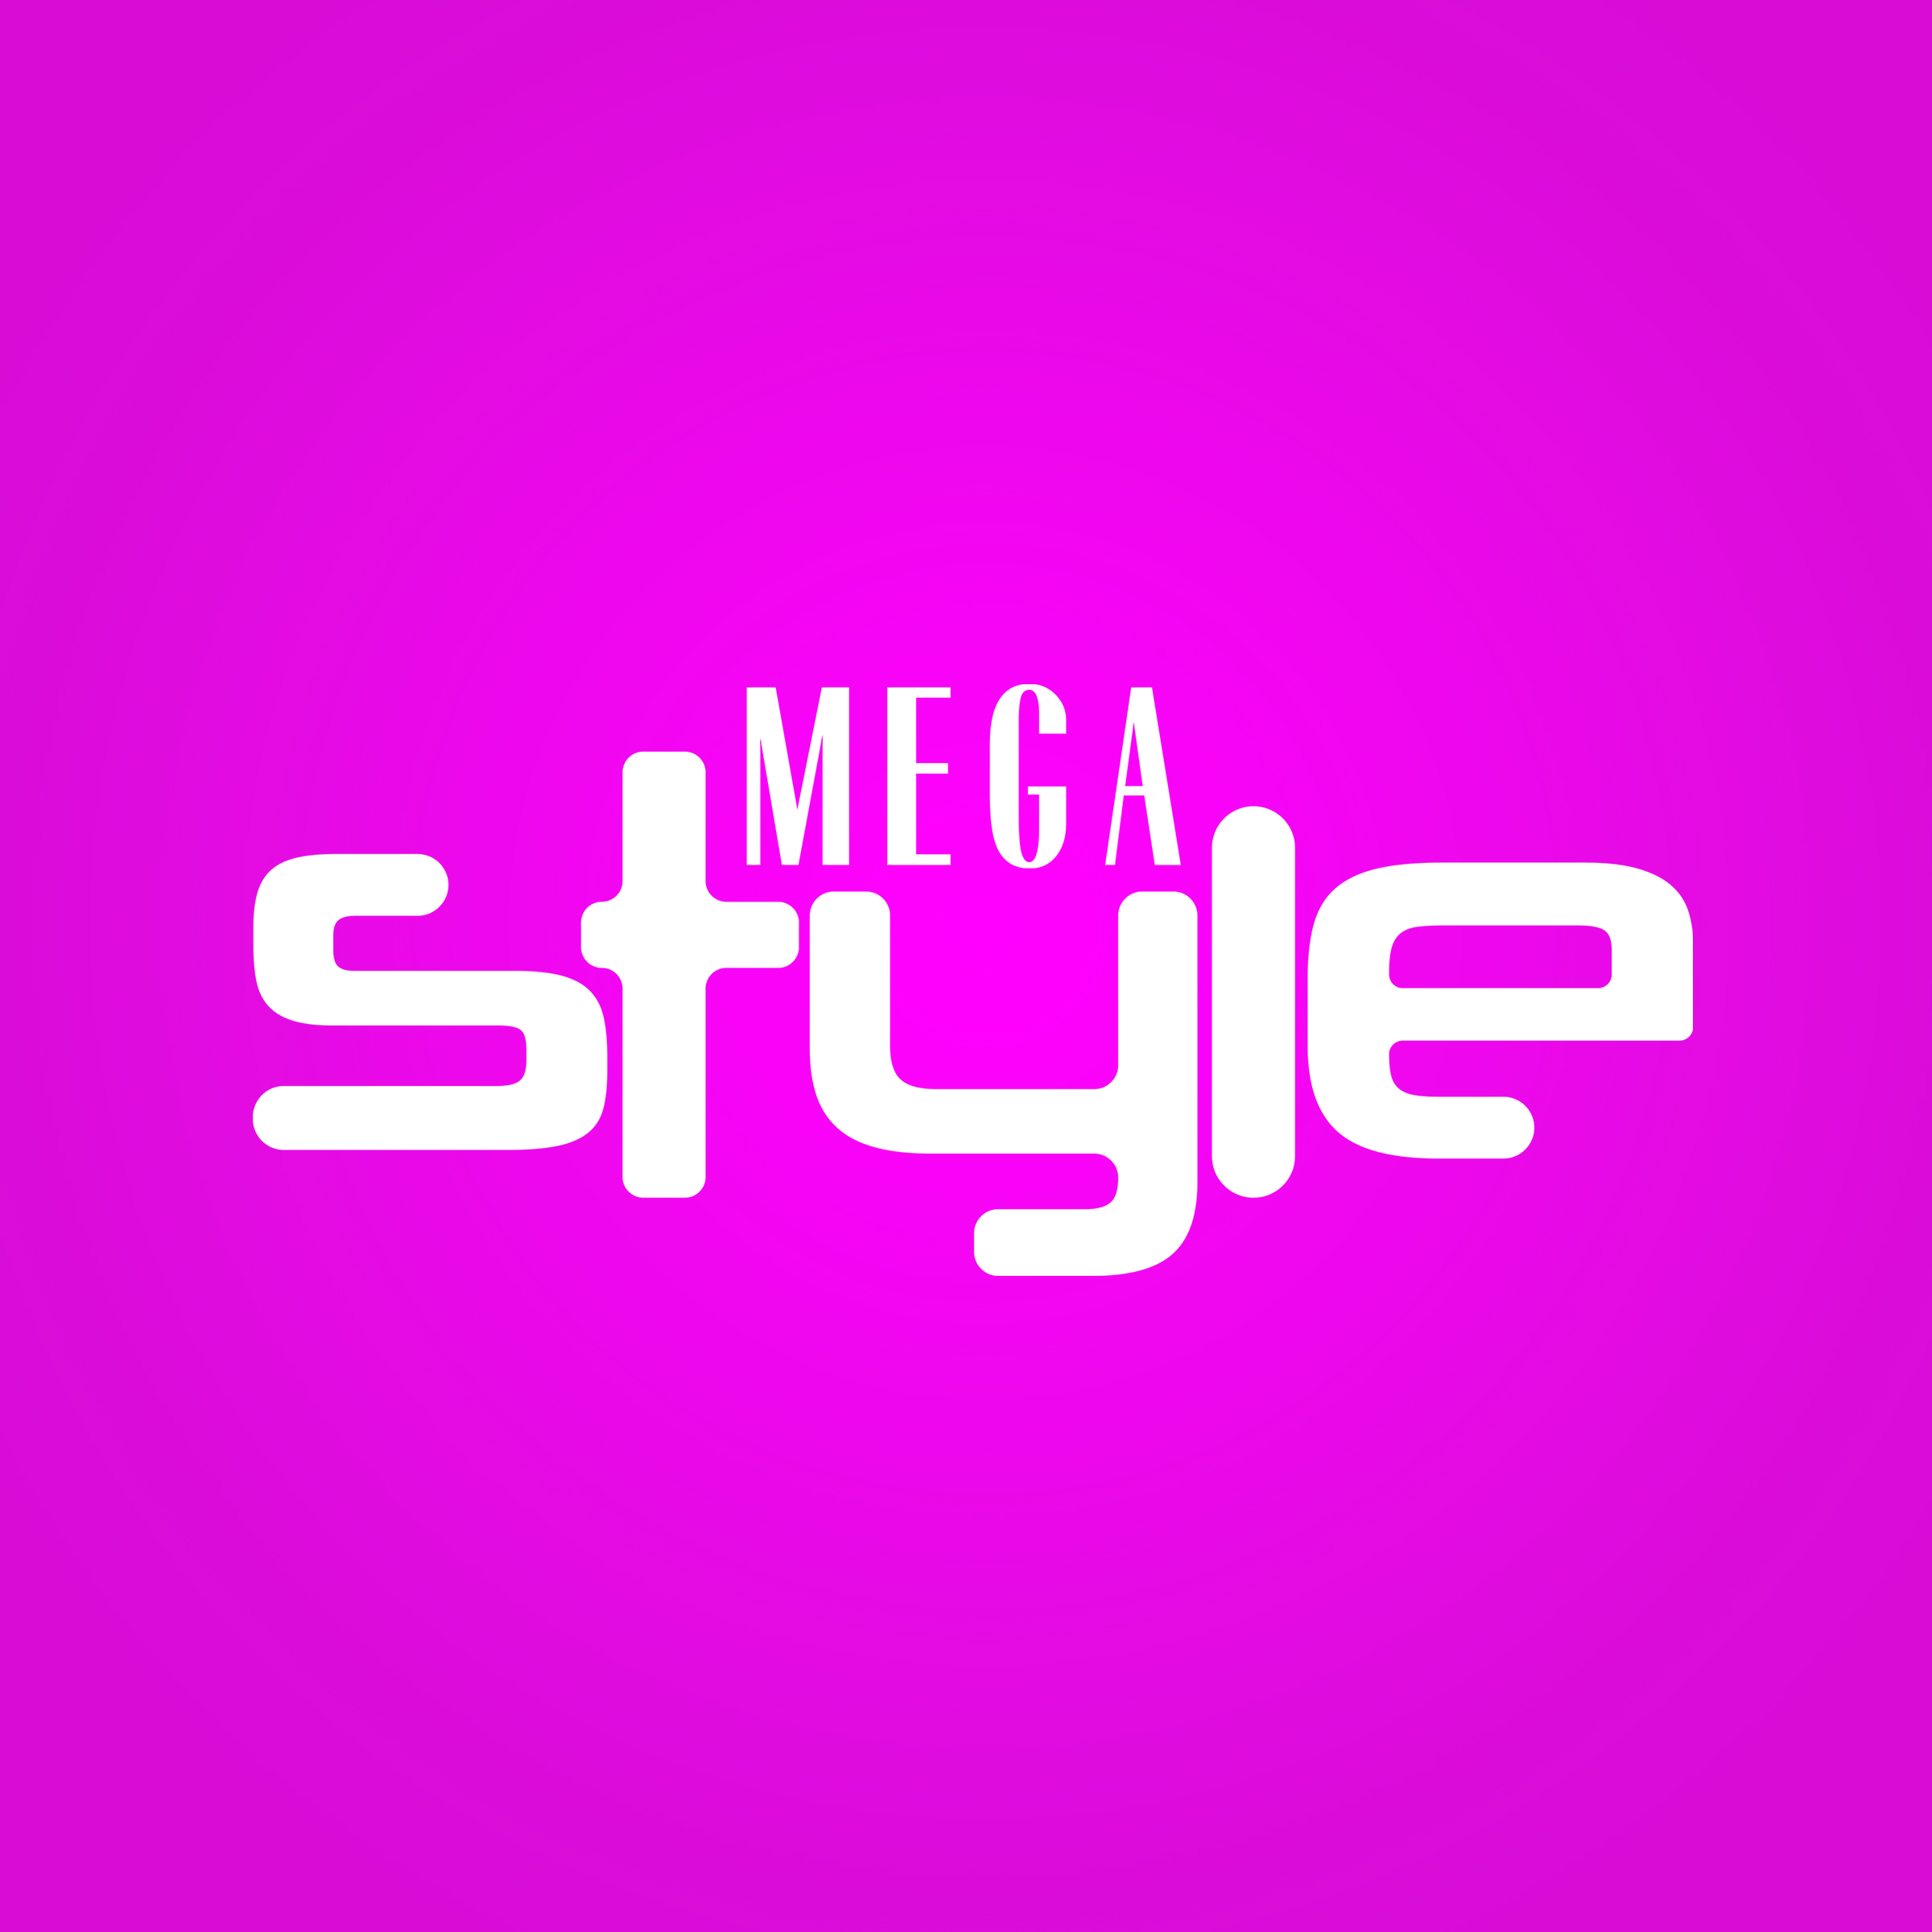 MEGA Magazine Unveils A Bigger and Bolder Logo